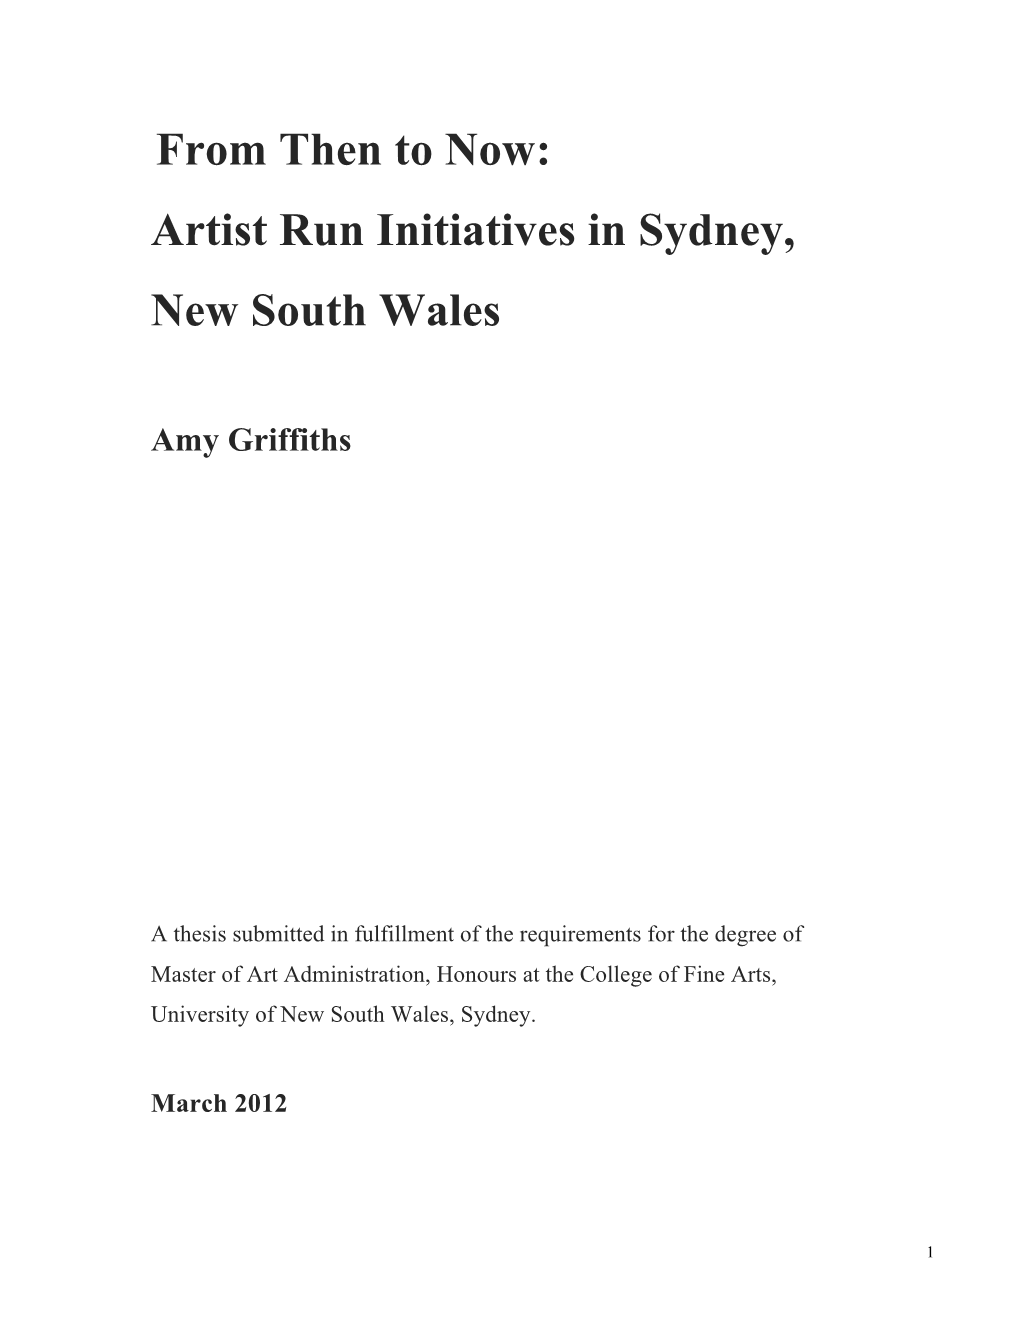 Artist Run Initiatives in Sydney, New South Wales